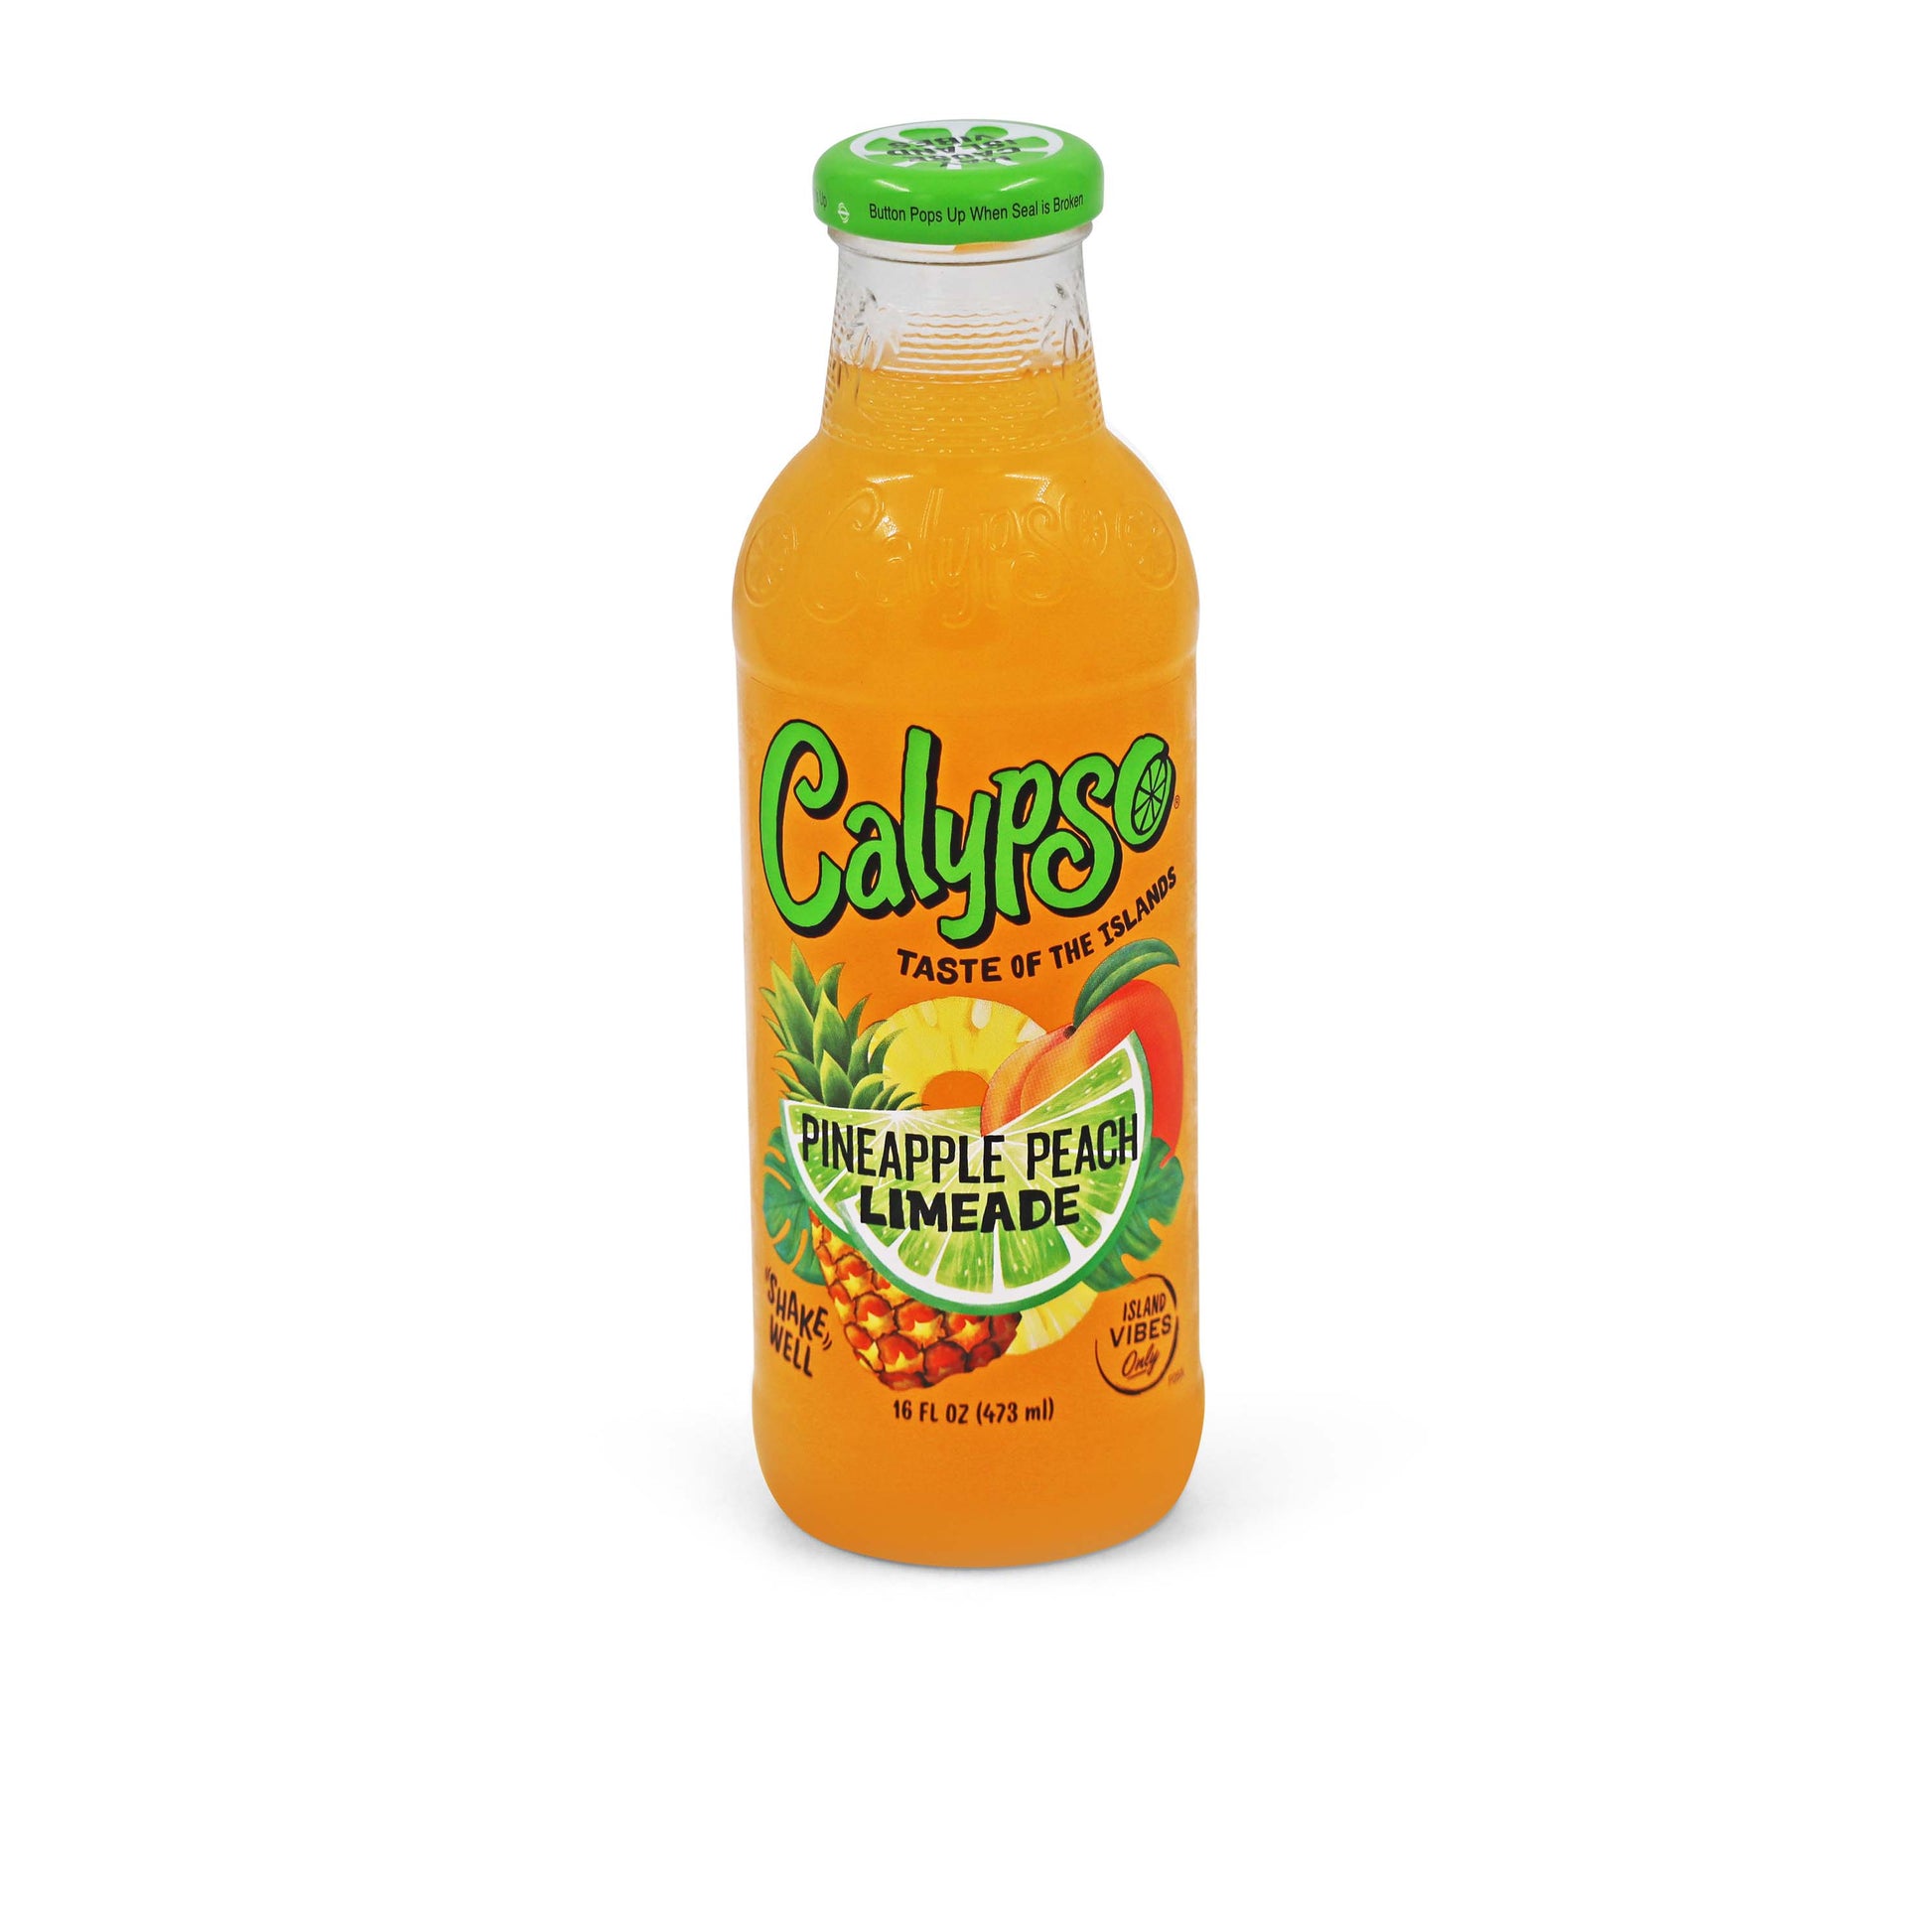 Calypso Pineapple Peach Limeade Drink - American Snacks & Drinks